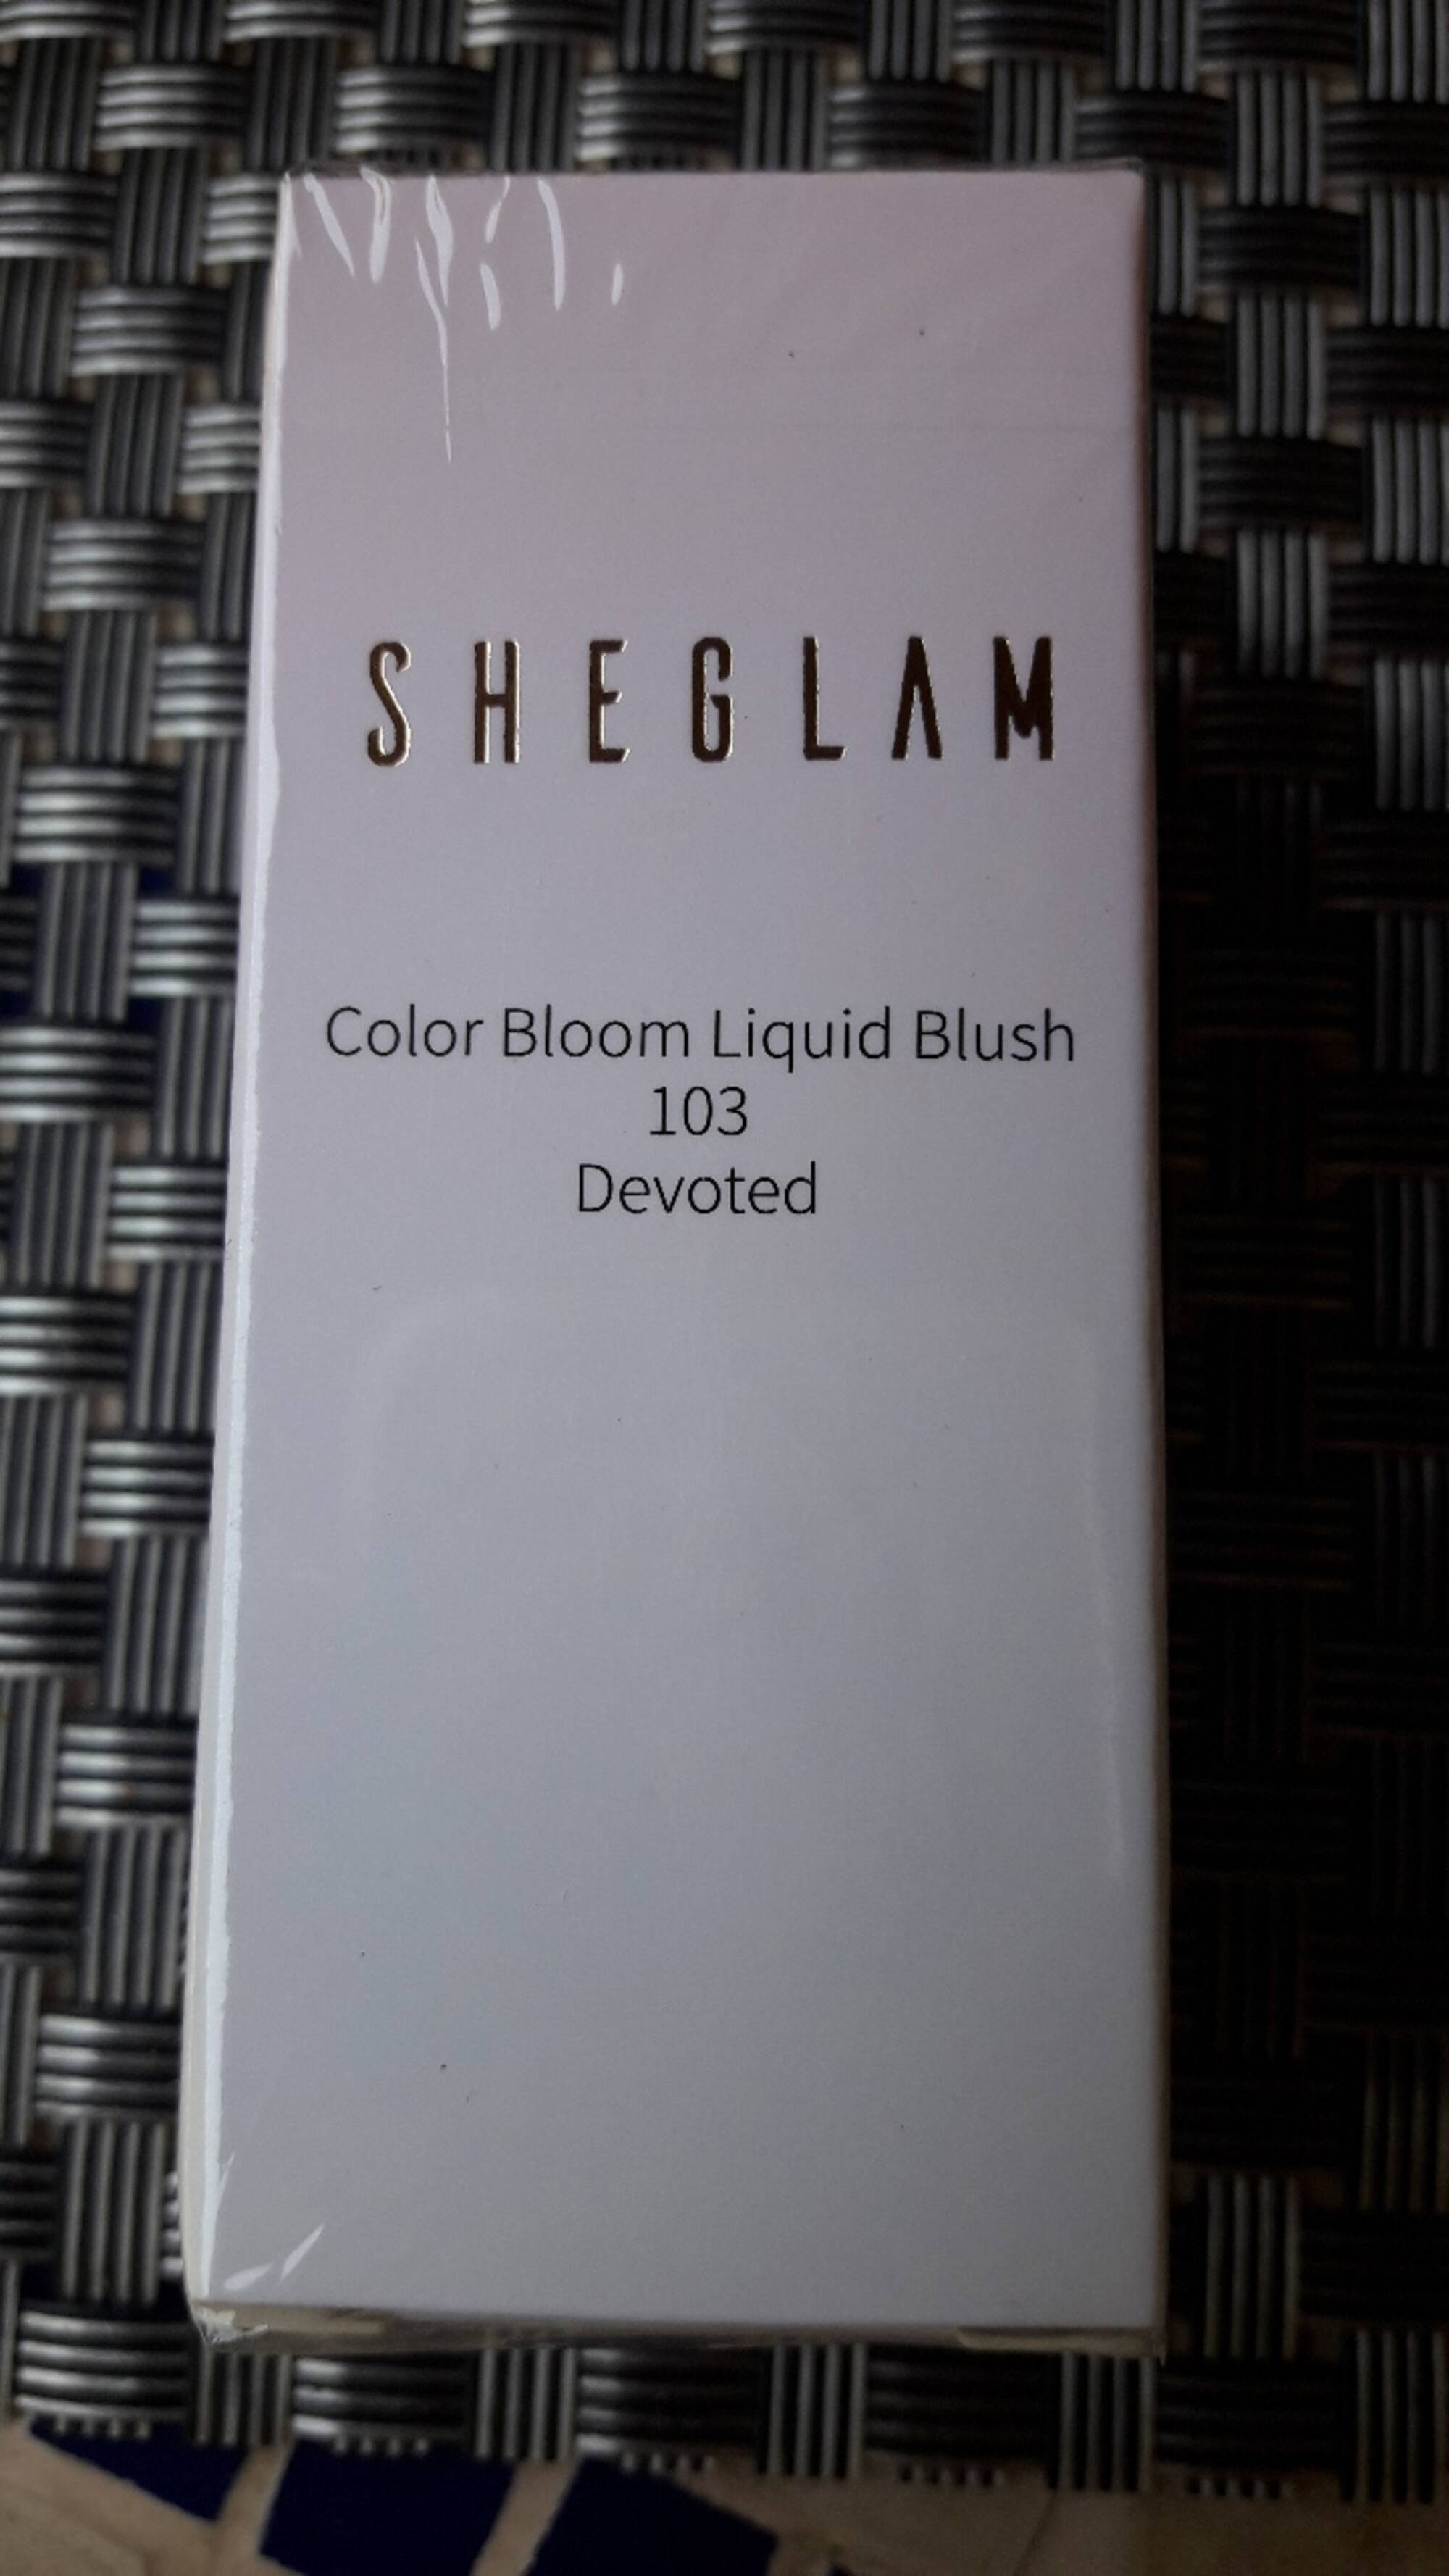 SHEGLAM - Color bloom liquid blush 103 Devoted